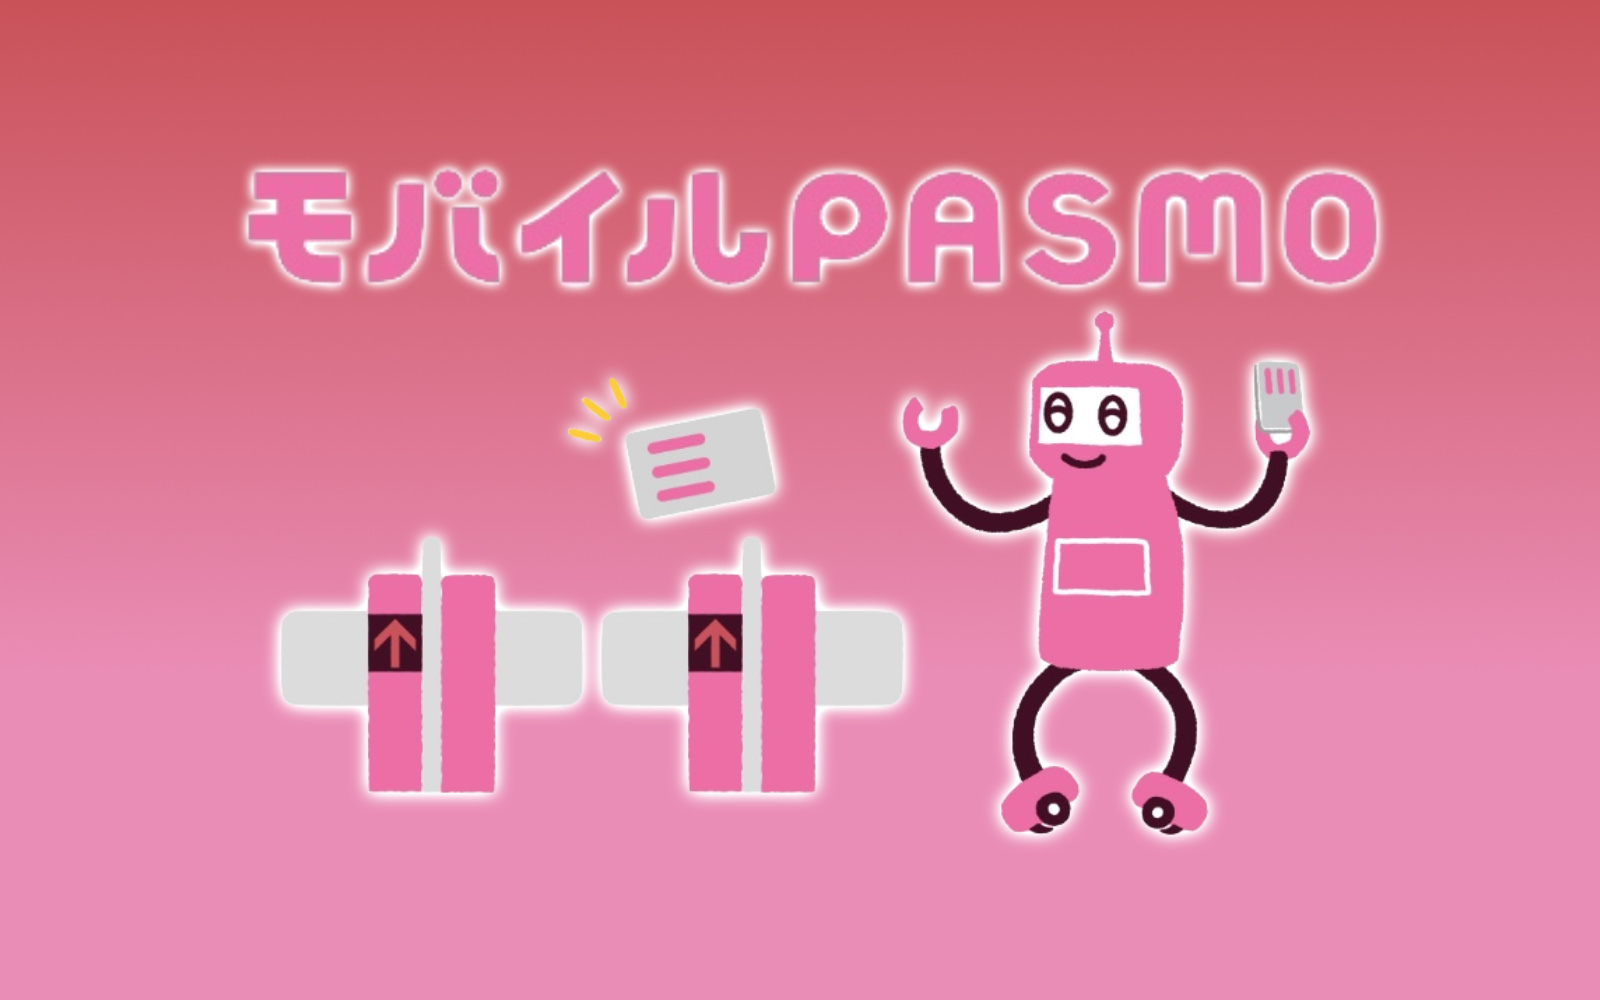 Mobile pasmo and mascot character